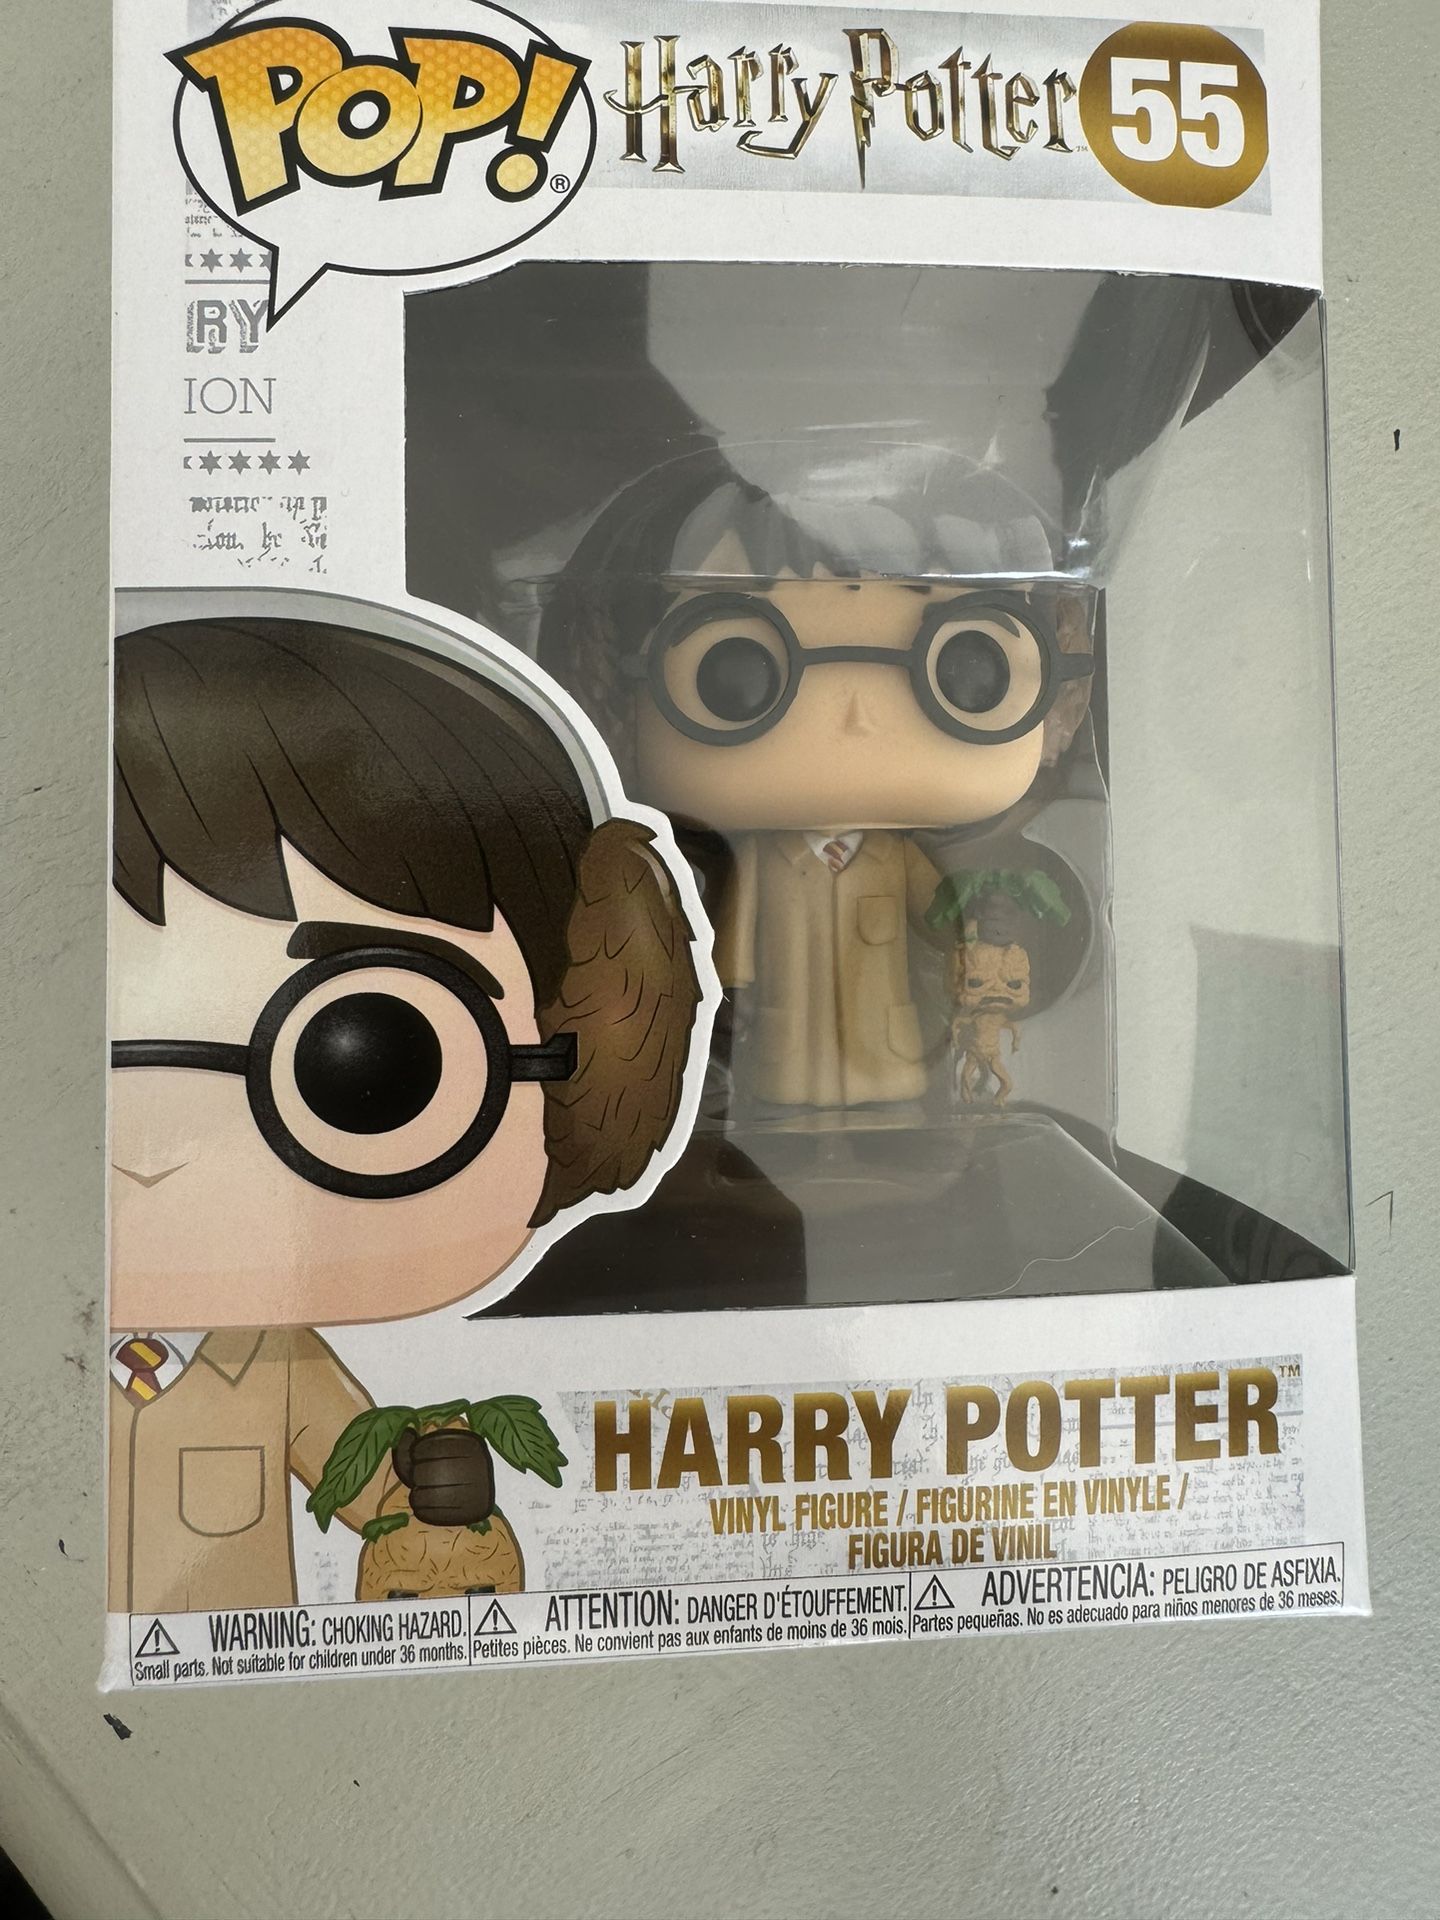 Harry Potter Mandrake Plant Funko Pop! (Harry Potter)